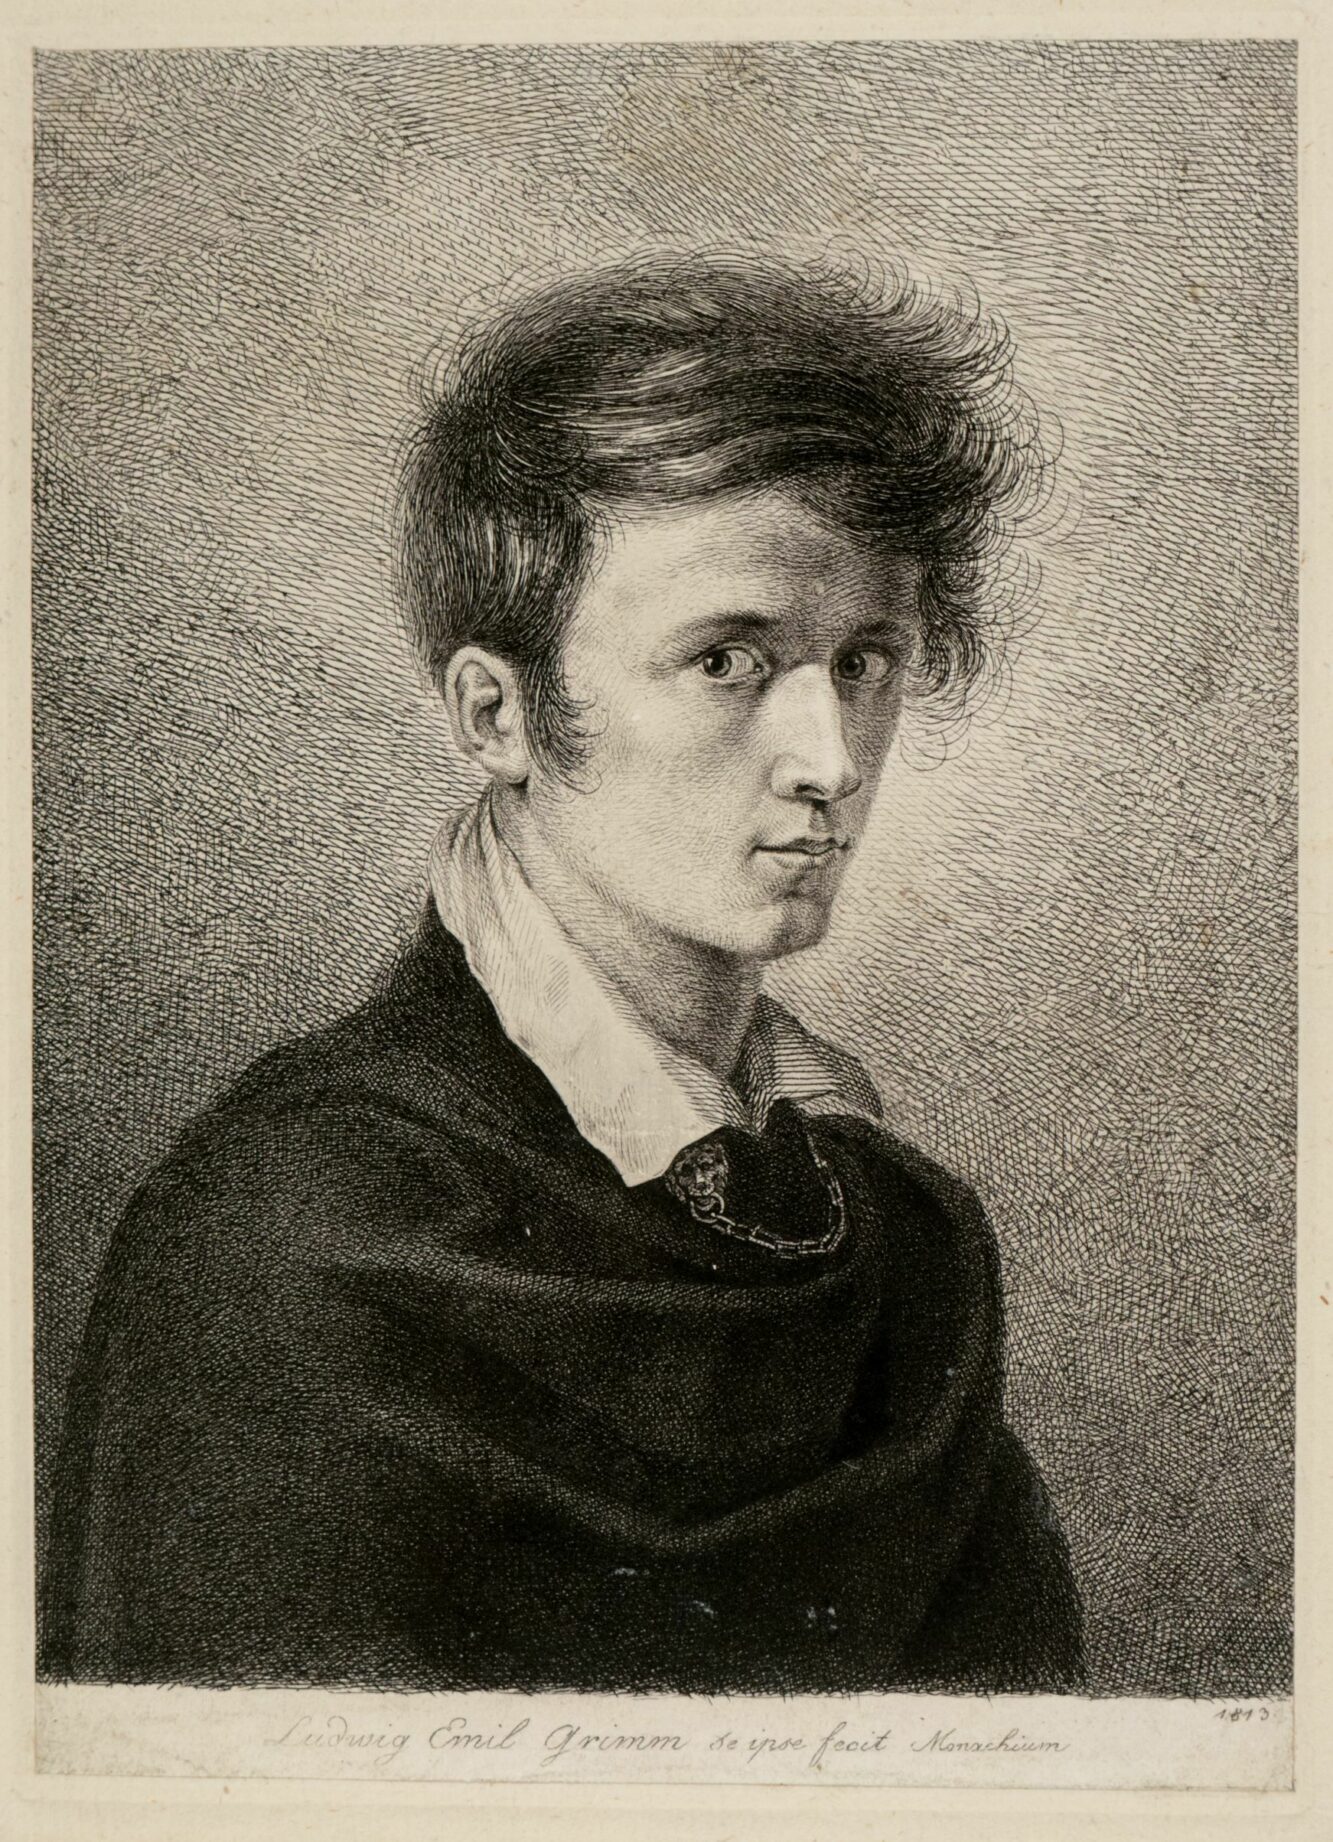 Selbstportrait Ludwig Emil Grimm | Illustration: Ludwig Emil Grimm